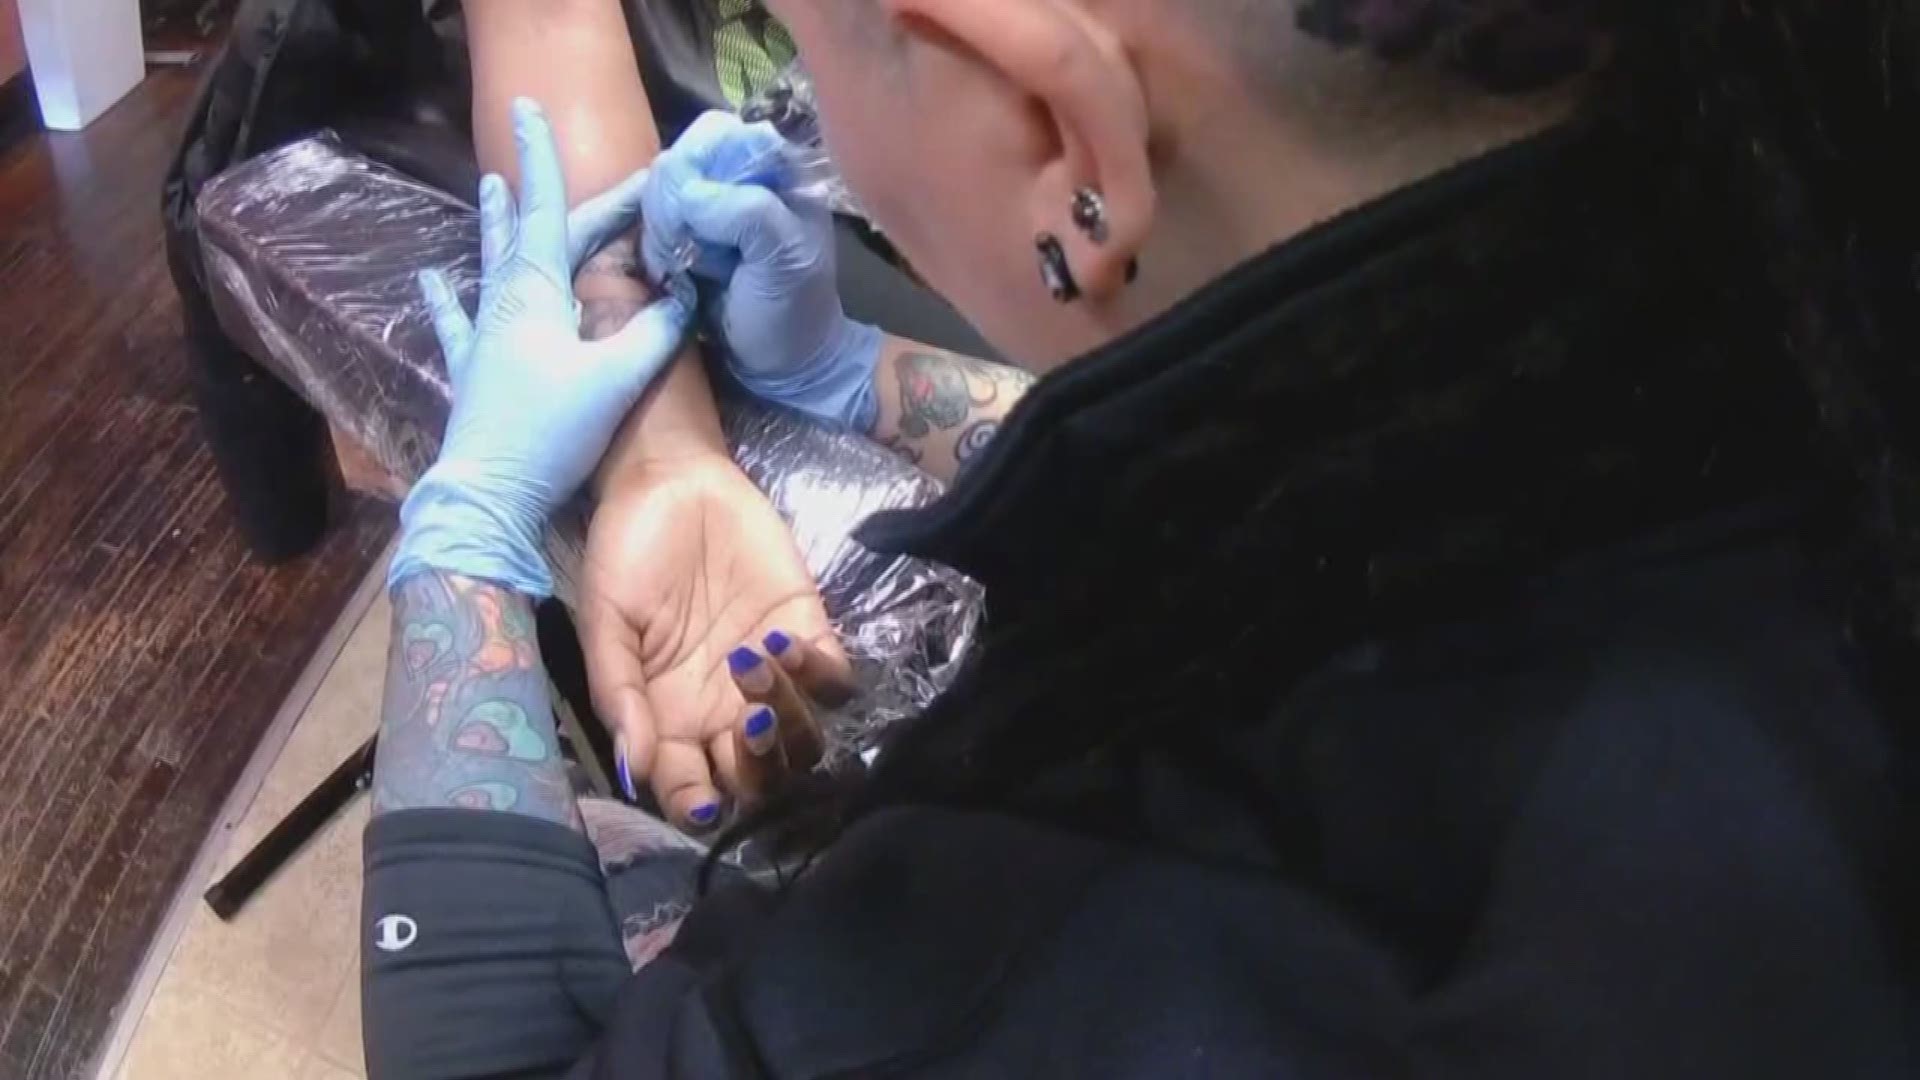 Local tattoo artist works to remove stigma